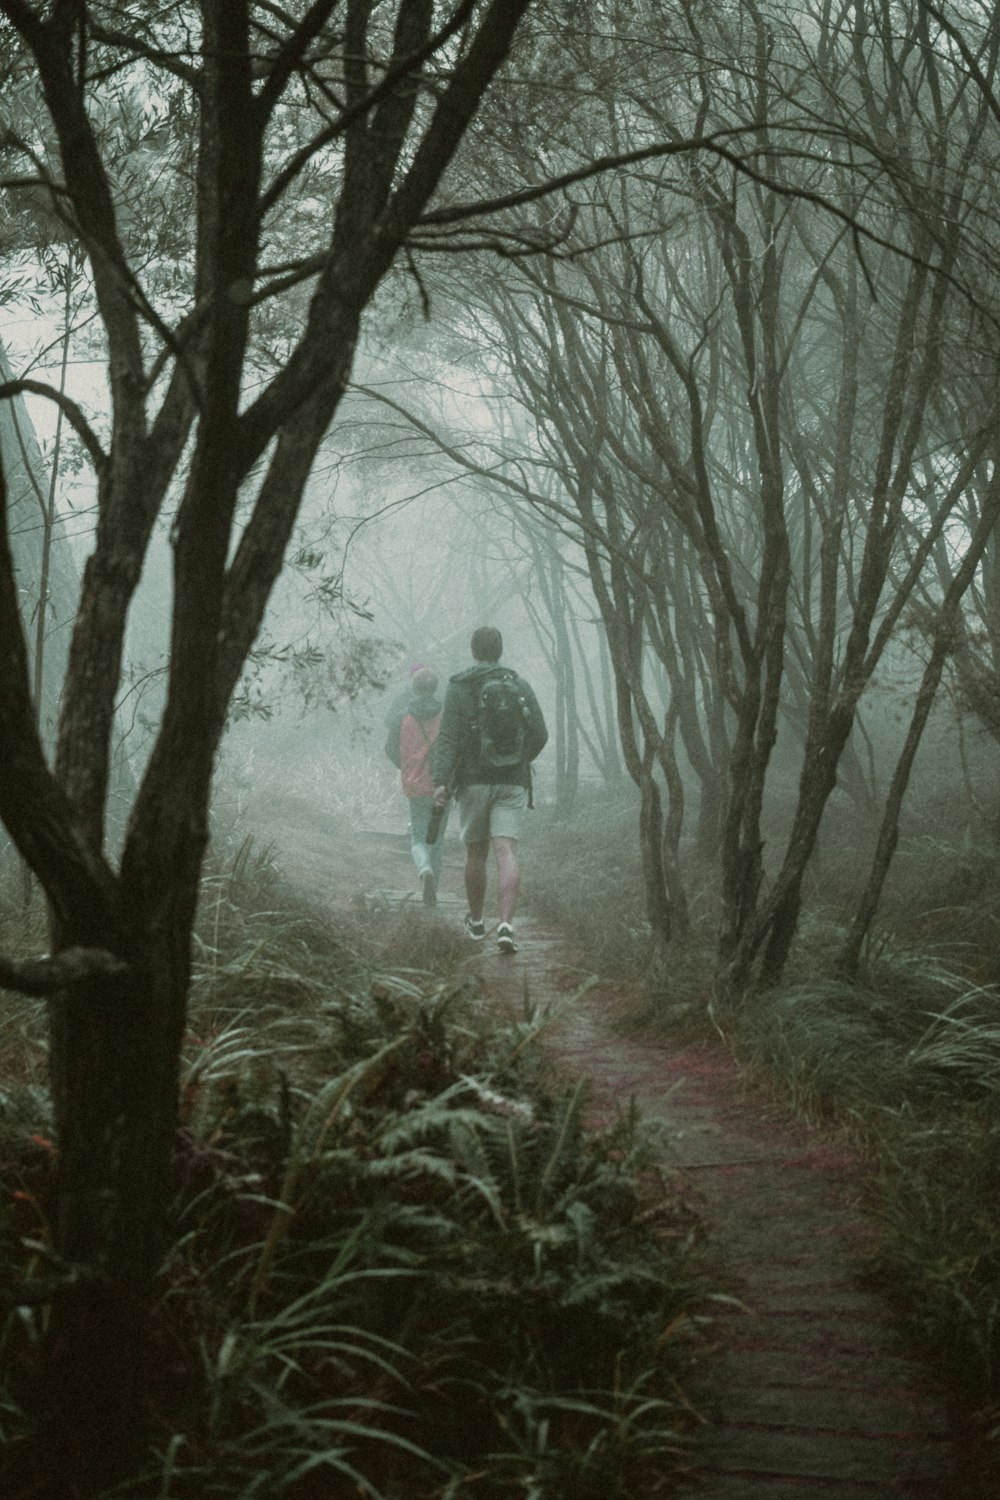 a man walking through a forest on a foggy day